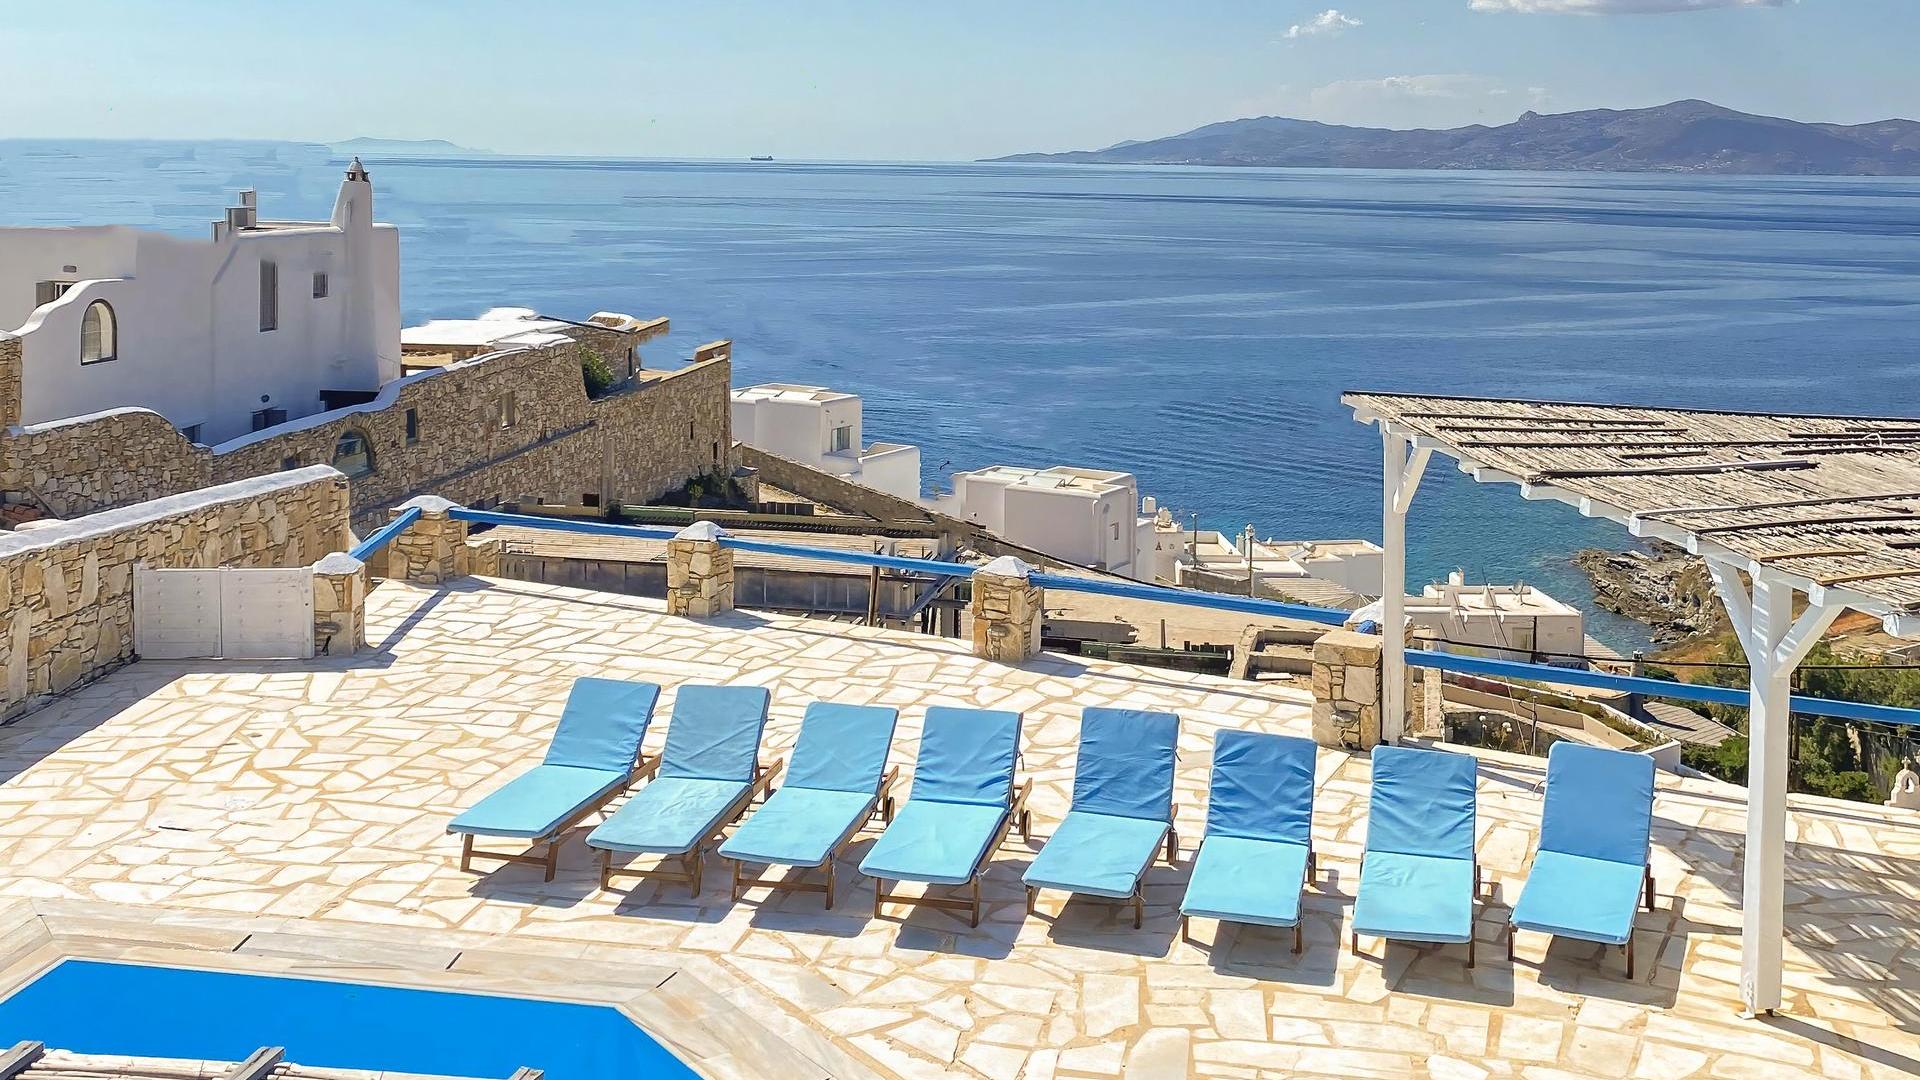 Blue Harmony Suites of Mykonos – Queen Suite for 4 guests